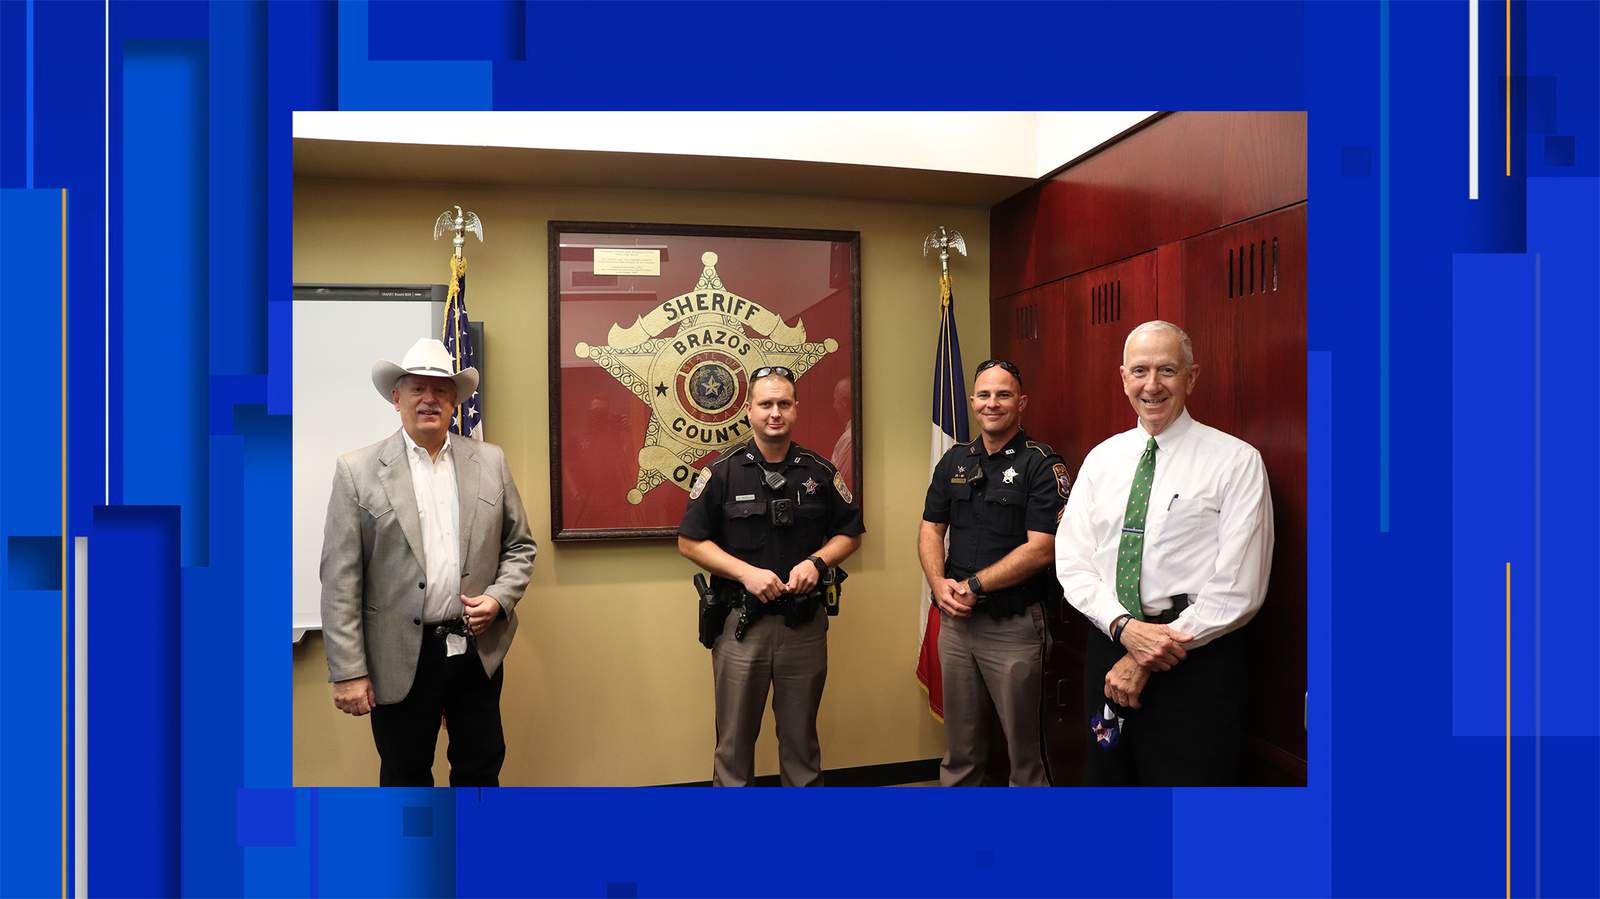 Brazos County sheriff’s deputy awarded Life Saving Medal after saving infant’s life